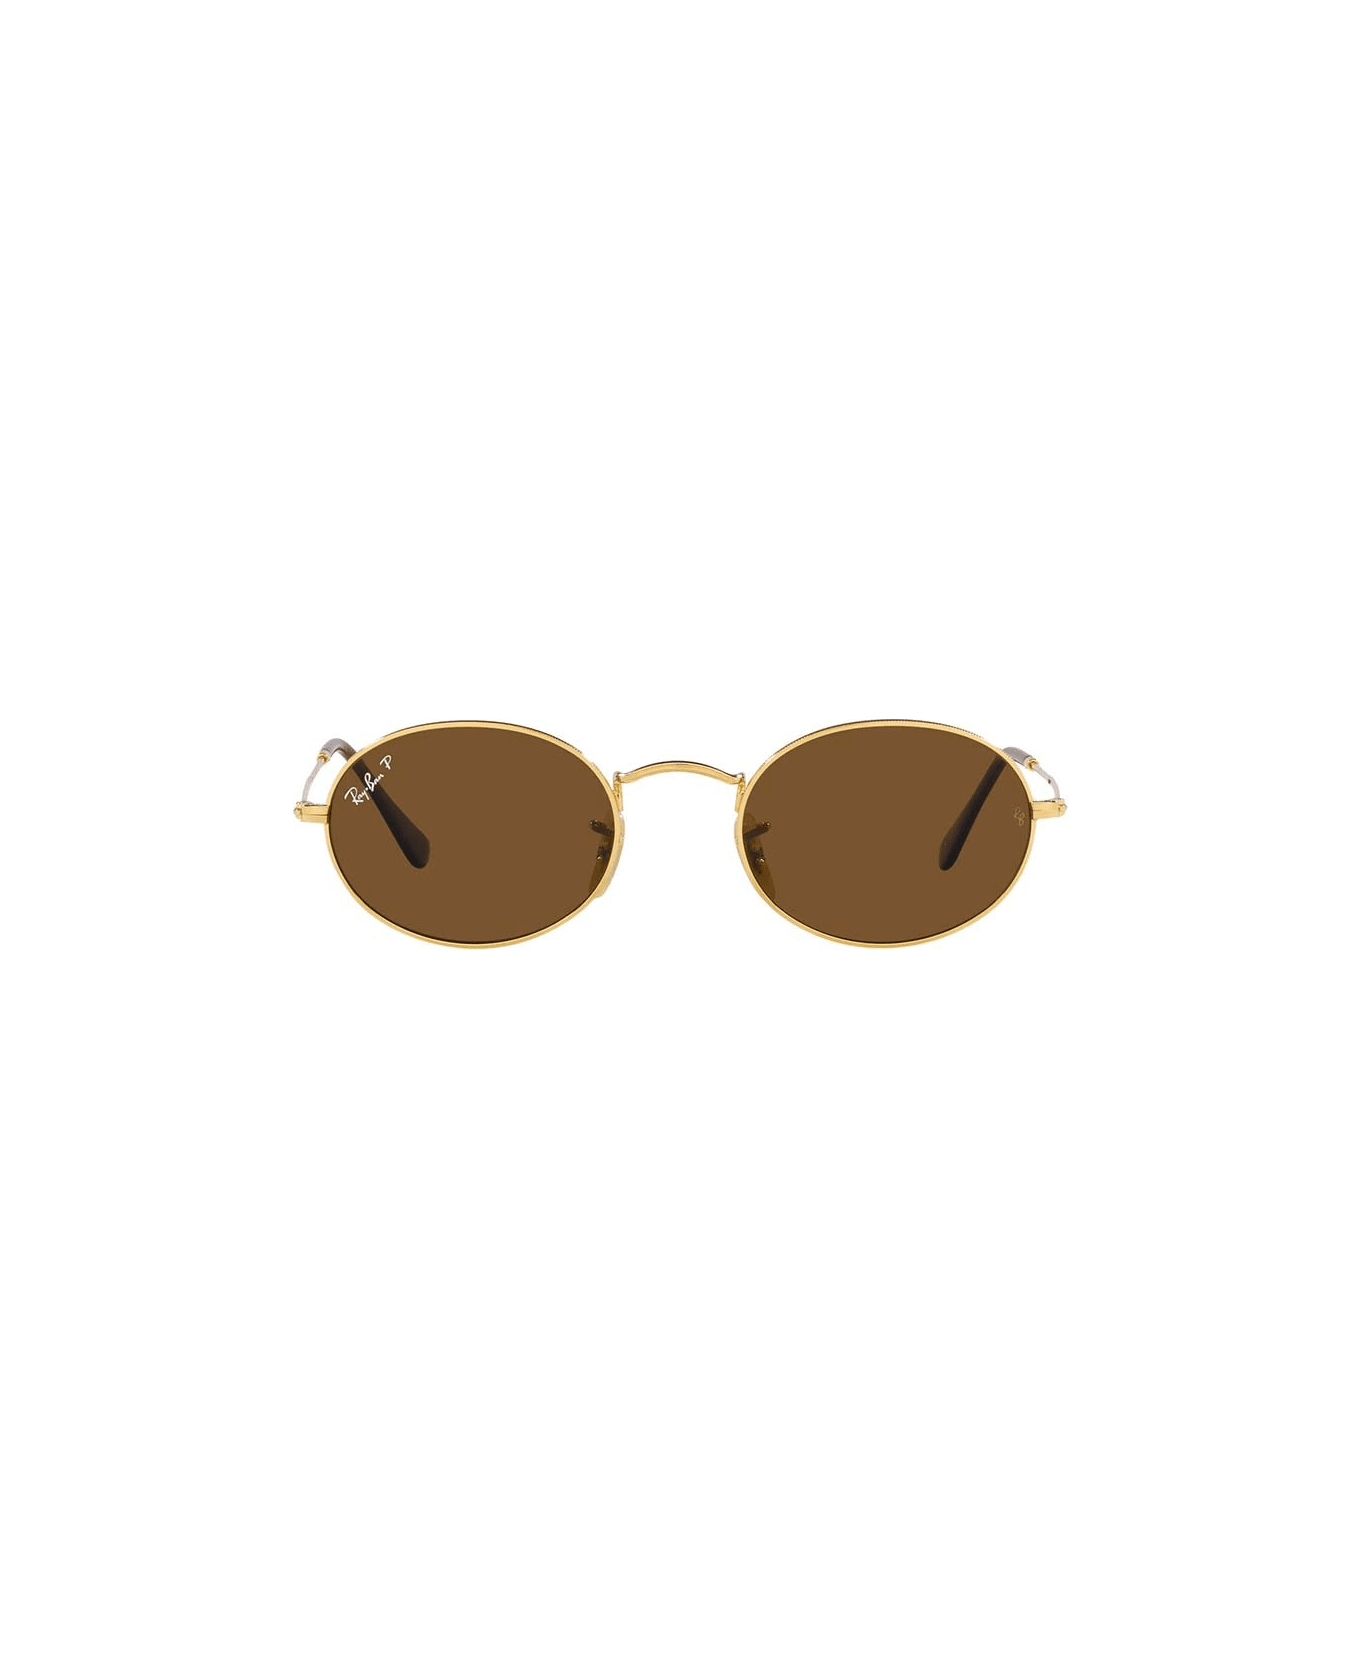 Ray-Ban Sunglasses - Oro/Marrone サングラス